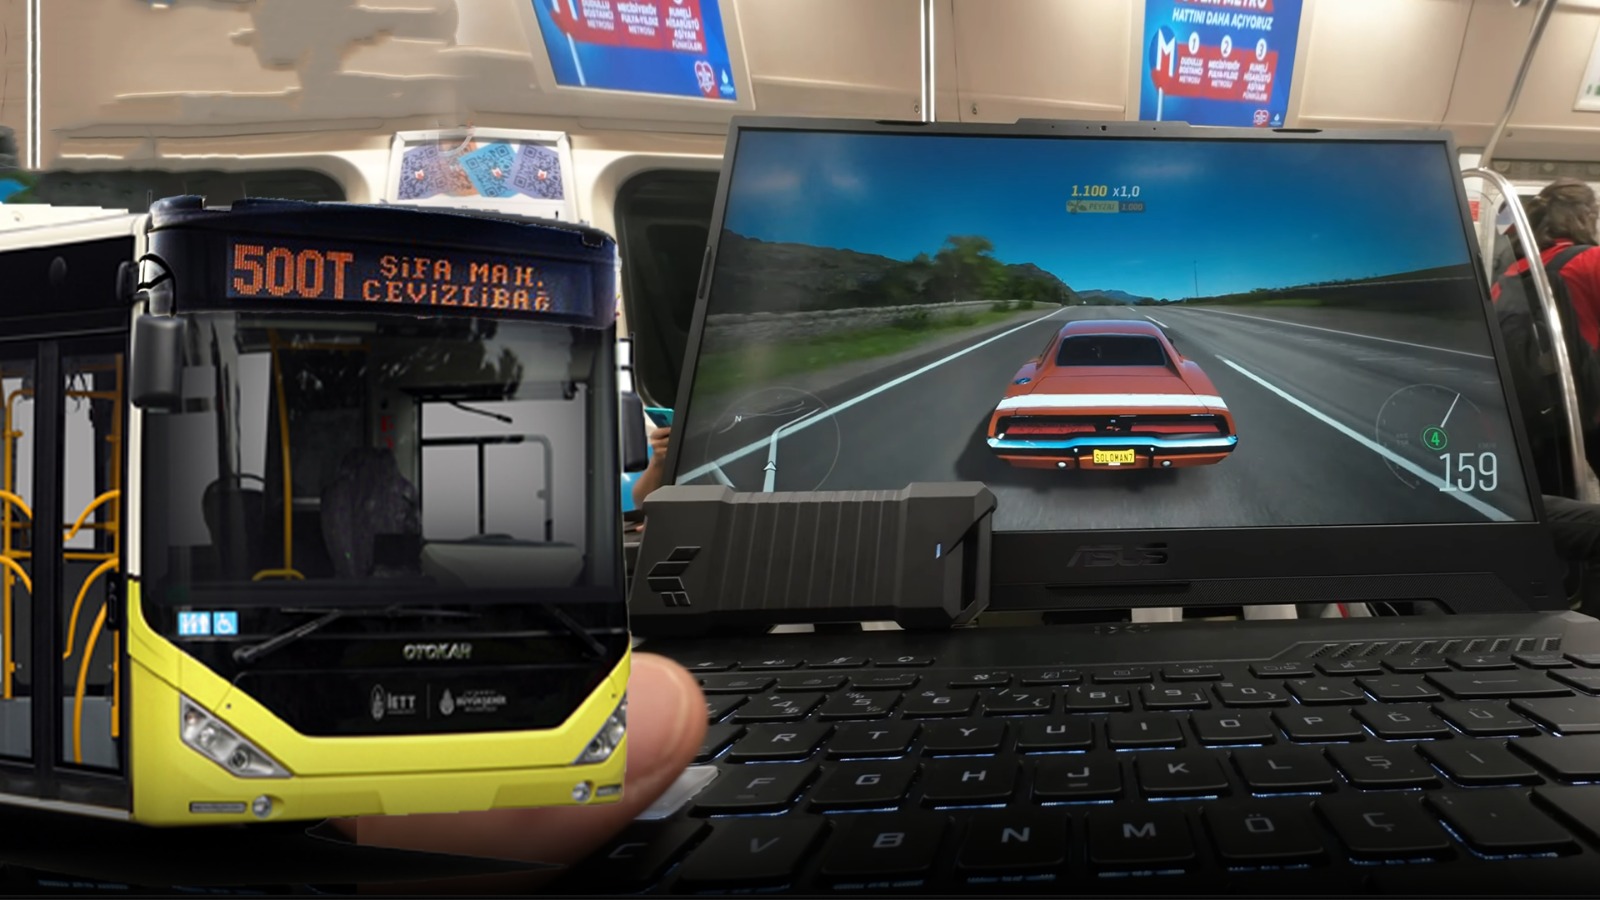 Asus TUF Gaming A1 SSD kutusunu 500T’de test ettik!